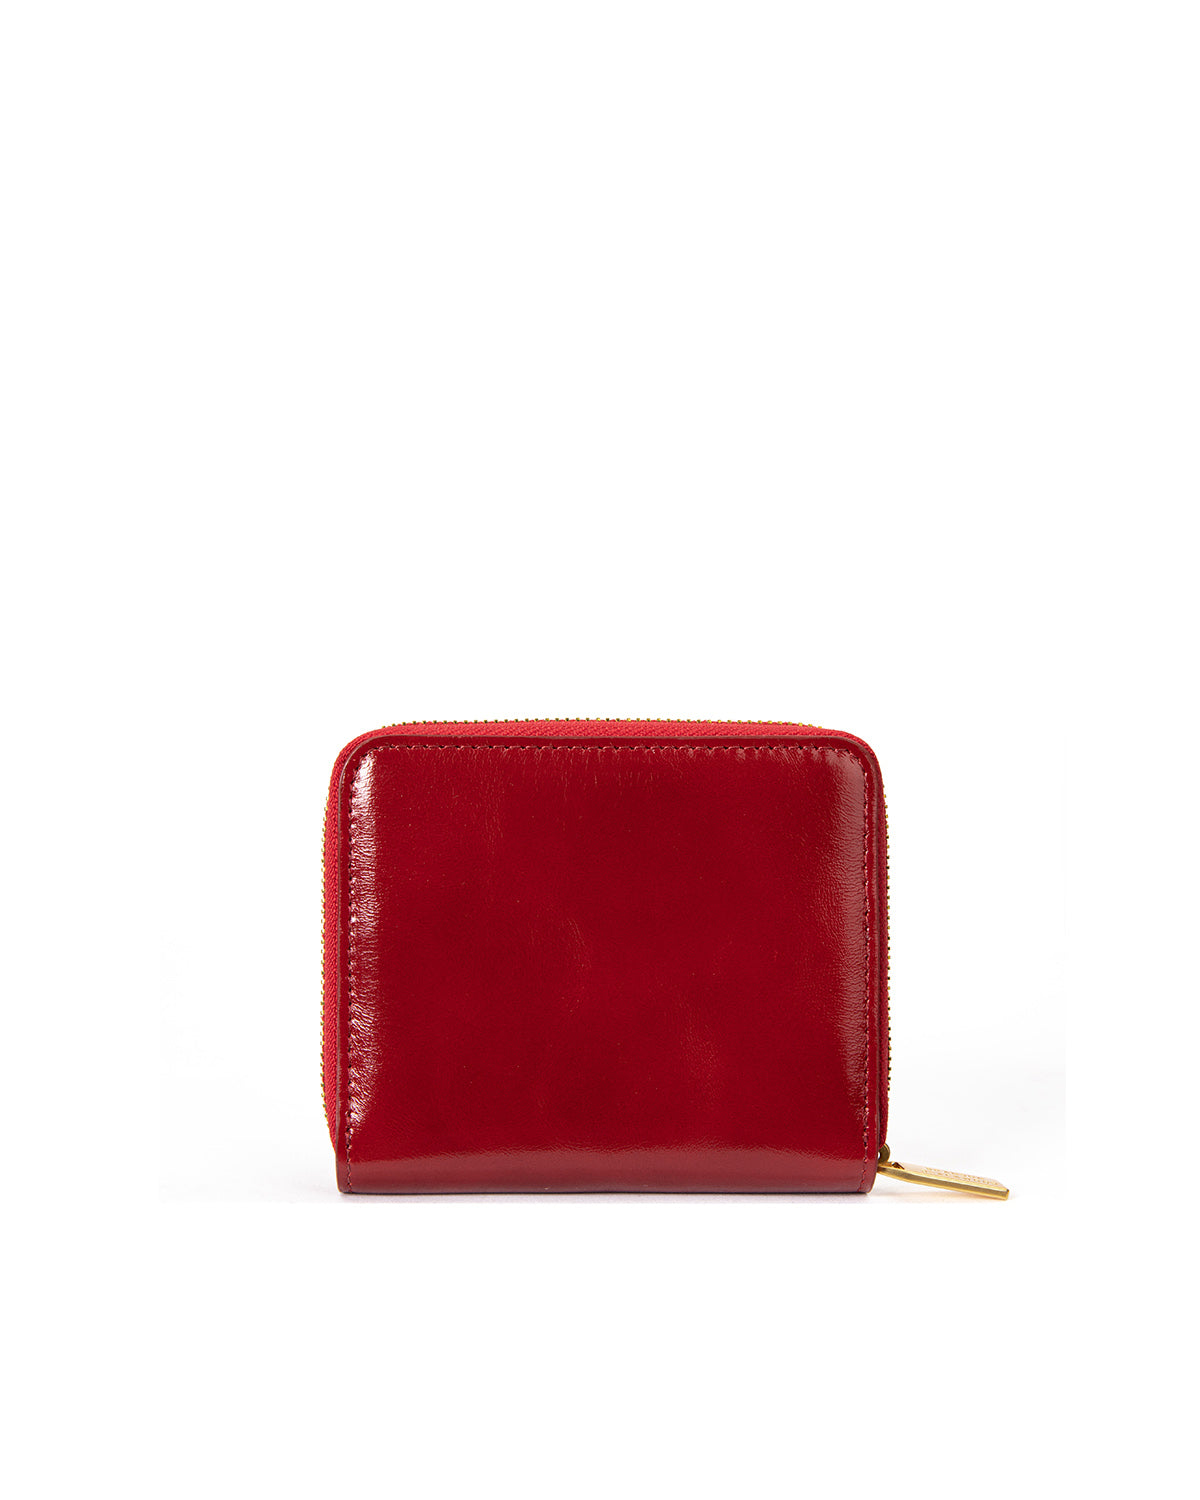 Brandon Blackwood New York - Wooster Wallet - Red Oil Leather